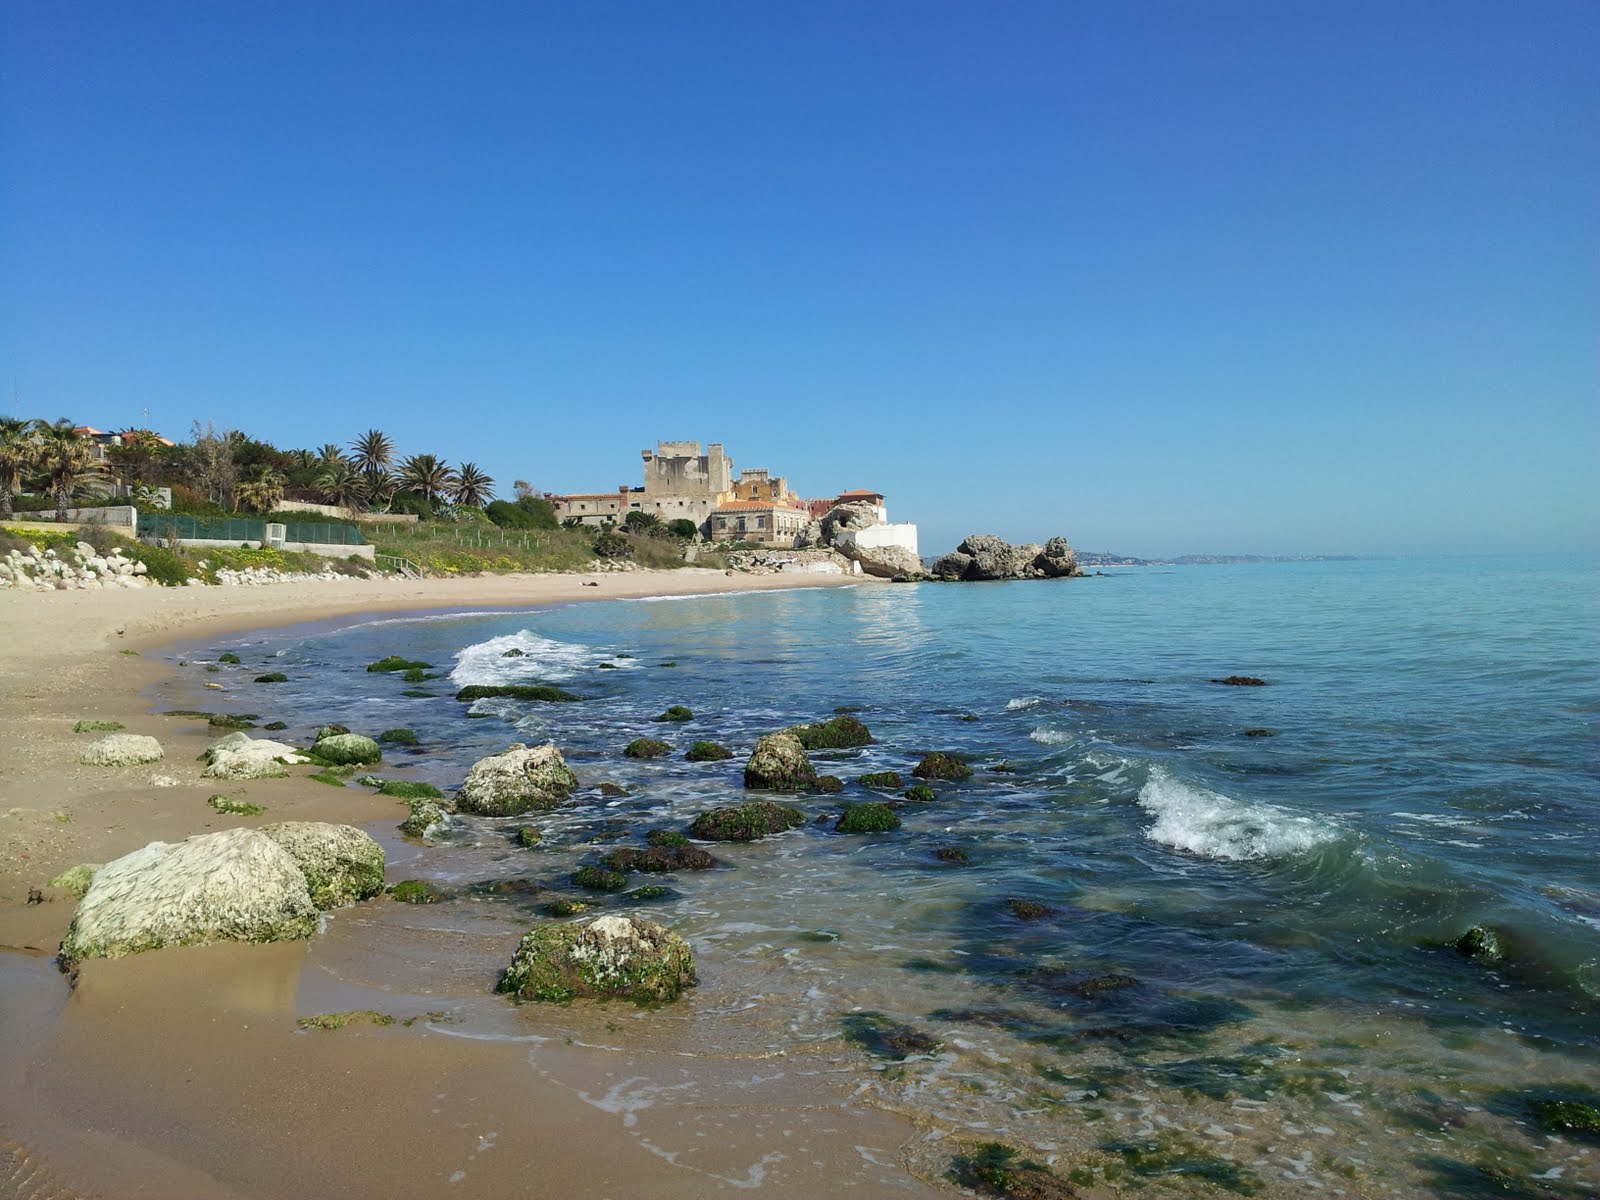 Foto van Spiaggia di Falconara met gemiddeld niveau van netheid